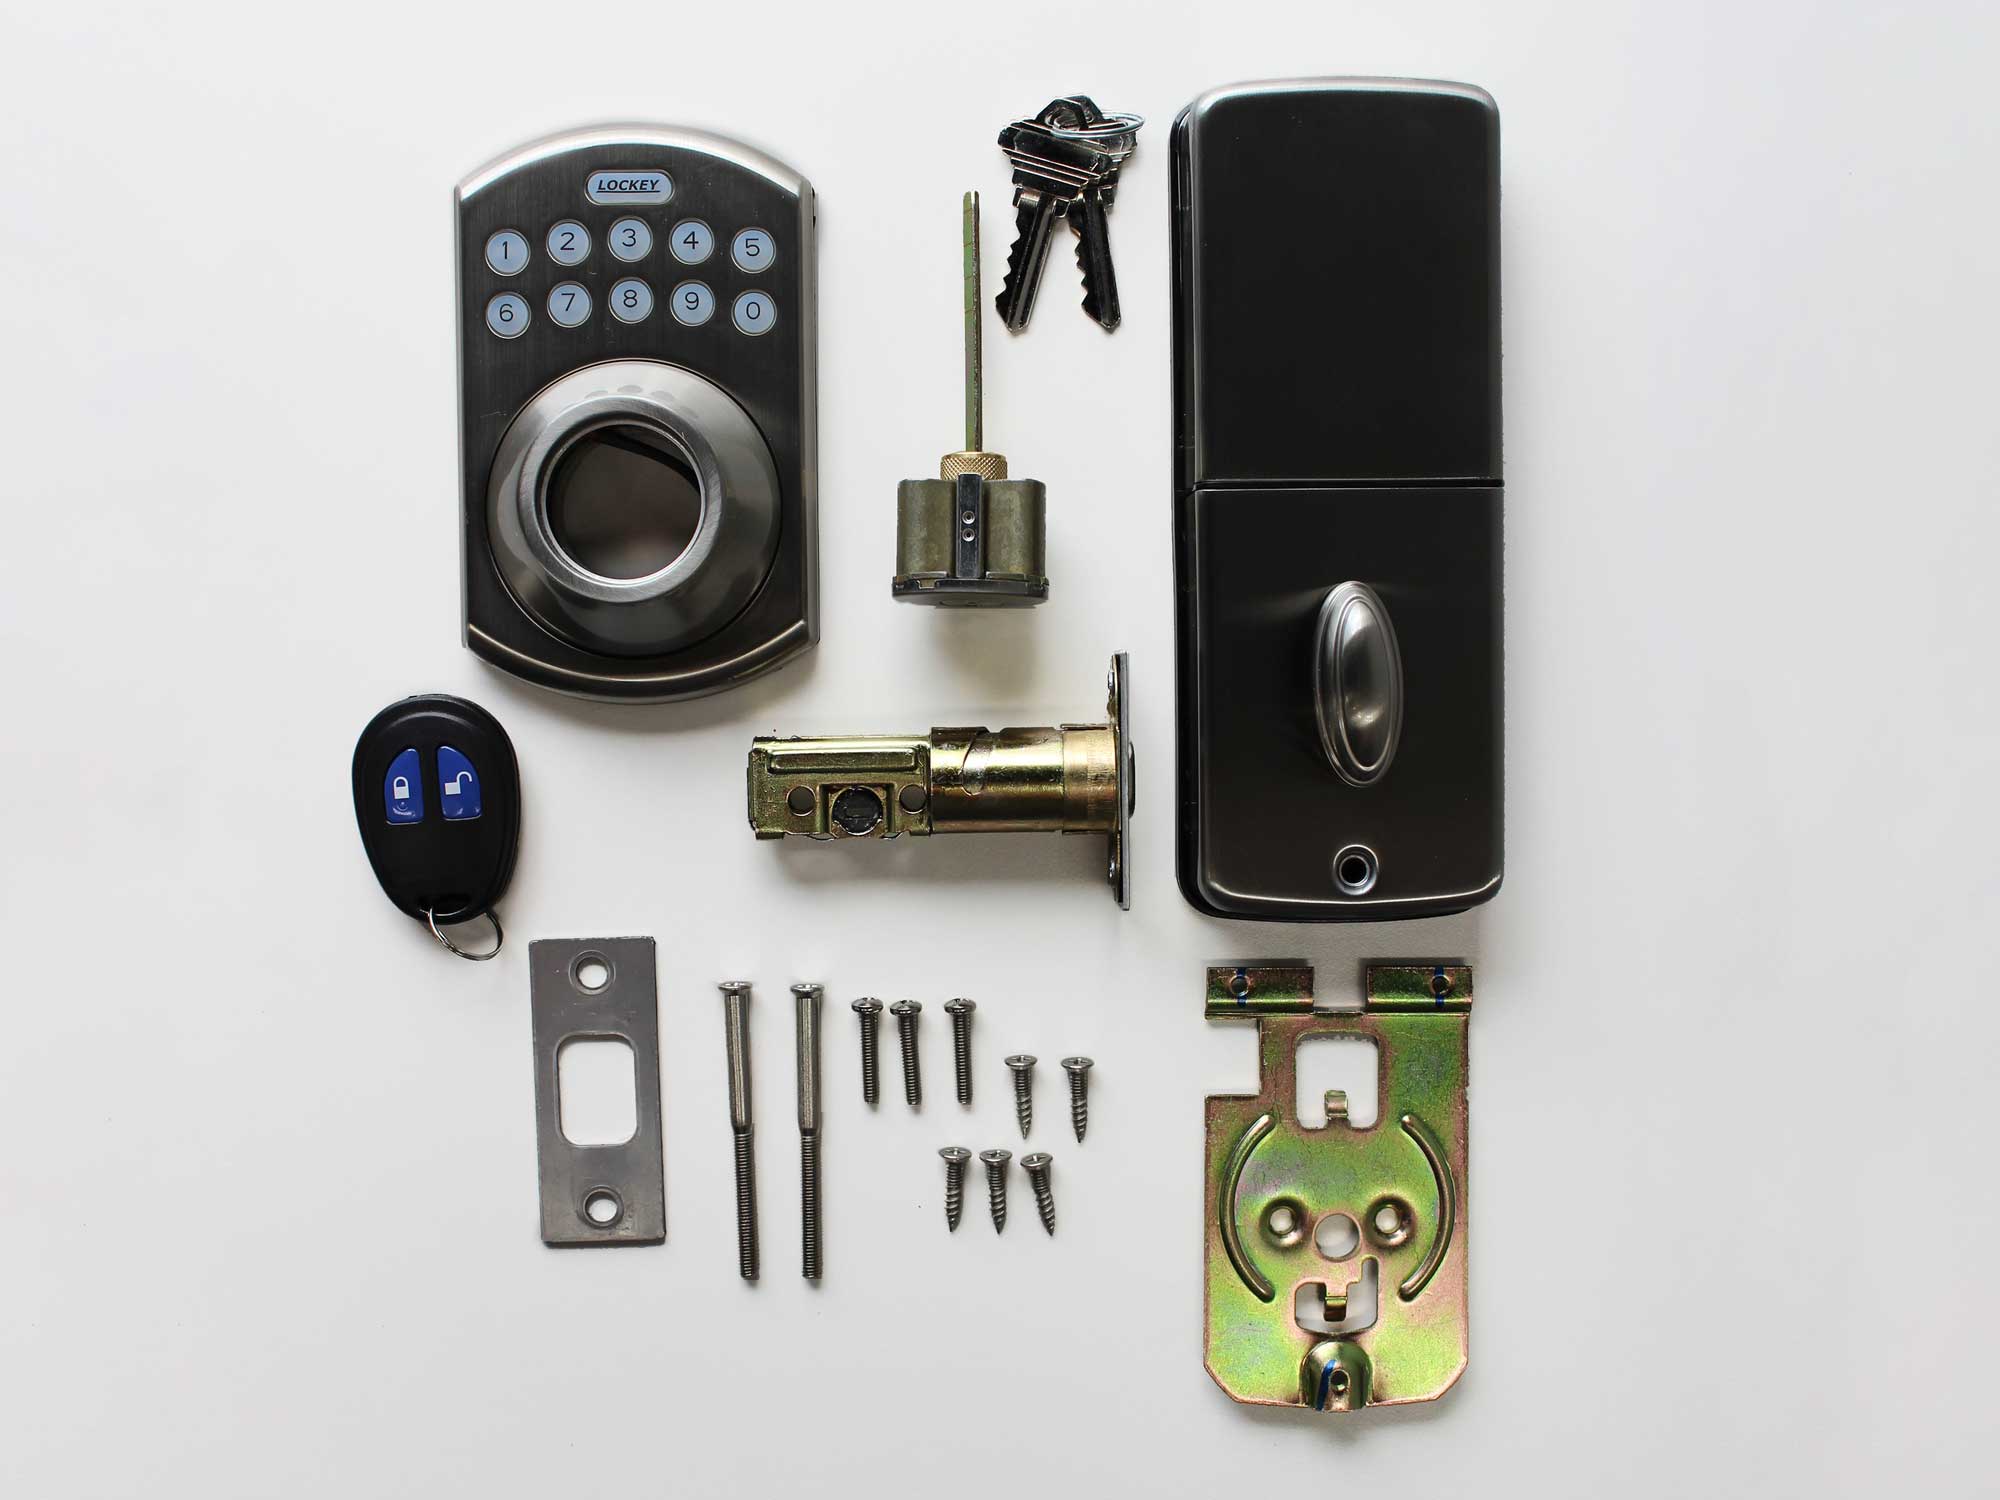 Lockey E915 Electronic Deadbolt Lock with Lighted Keypad - Click Image to Close